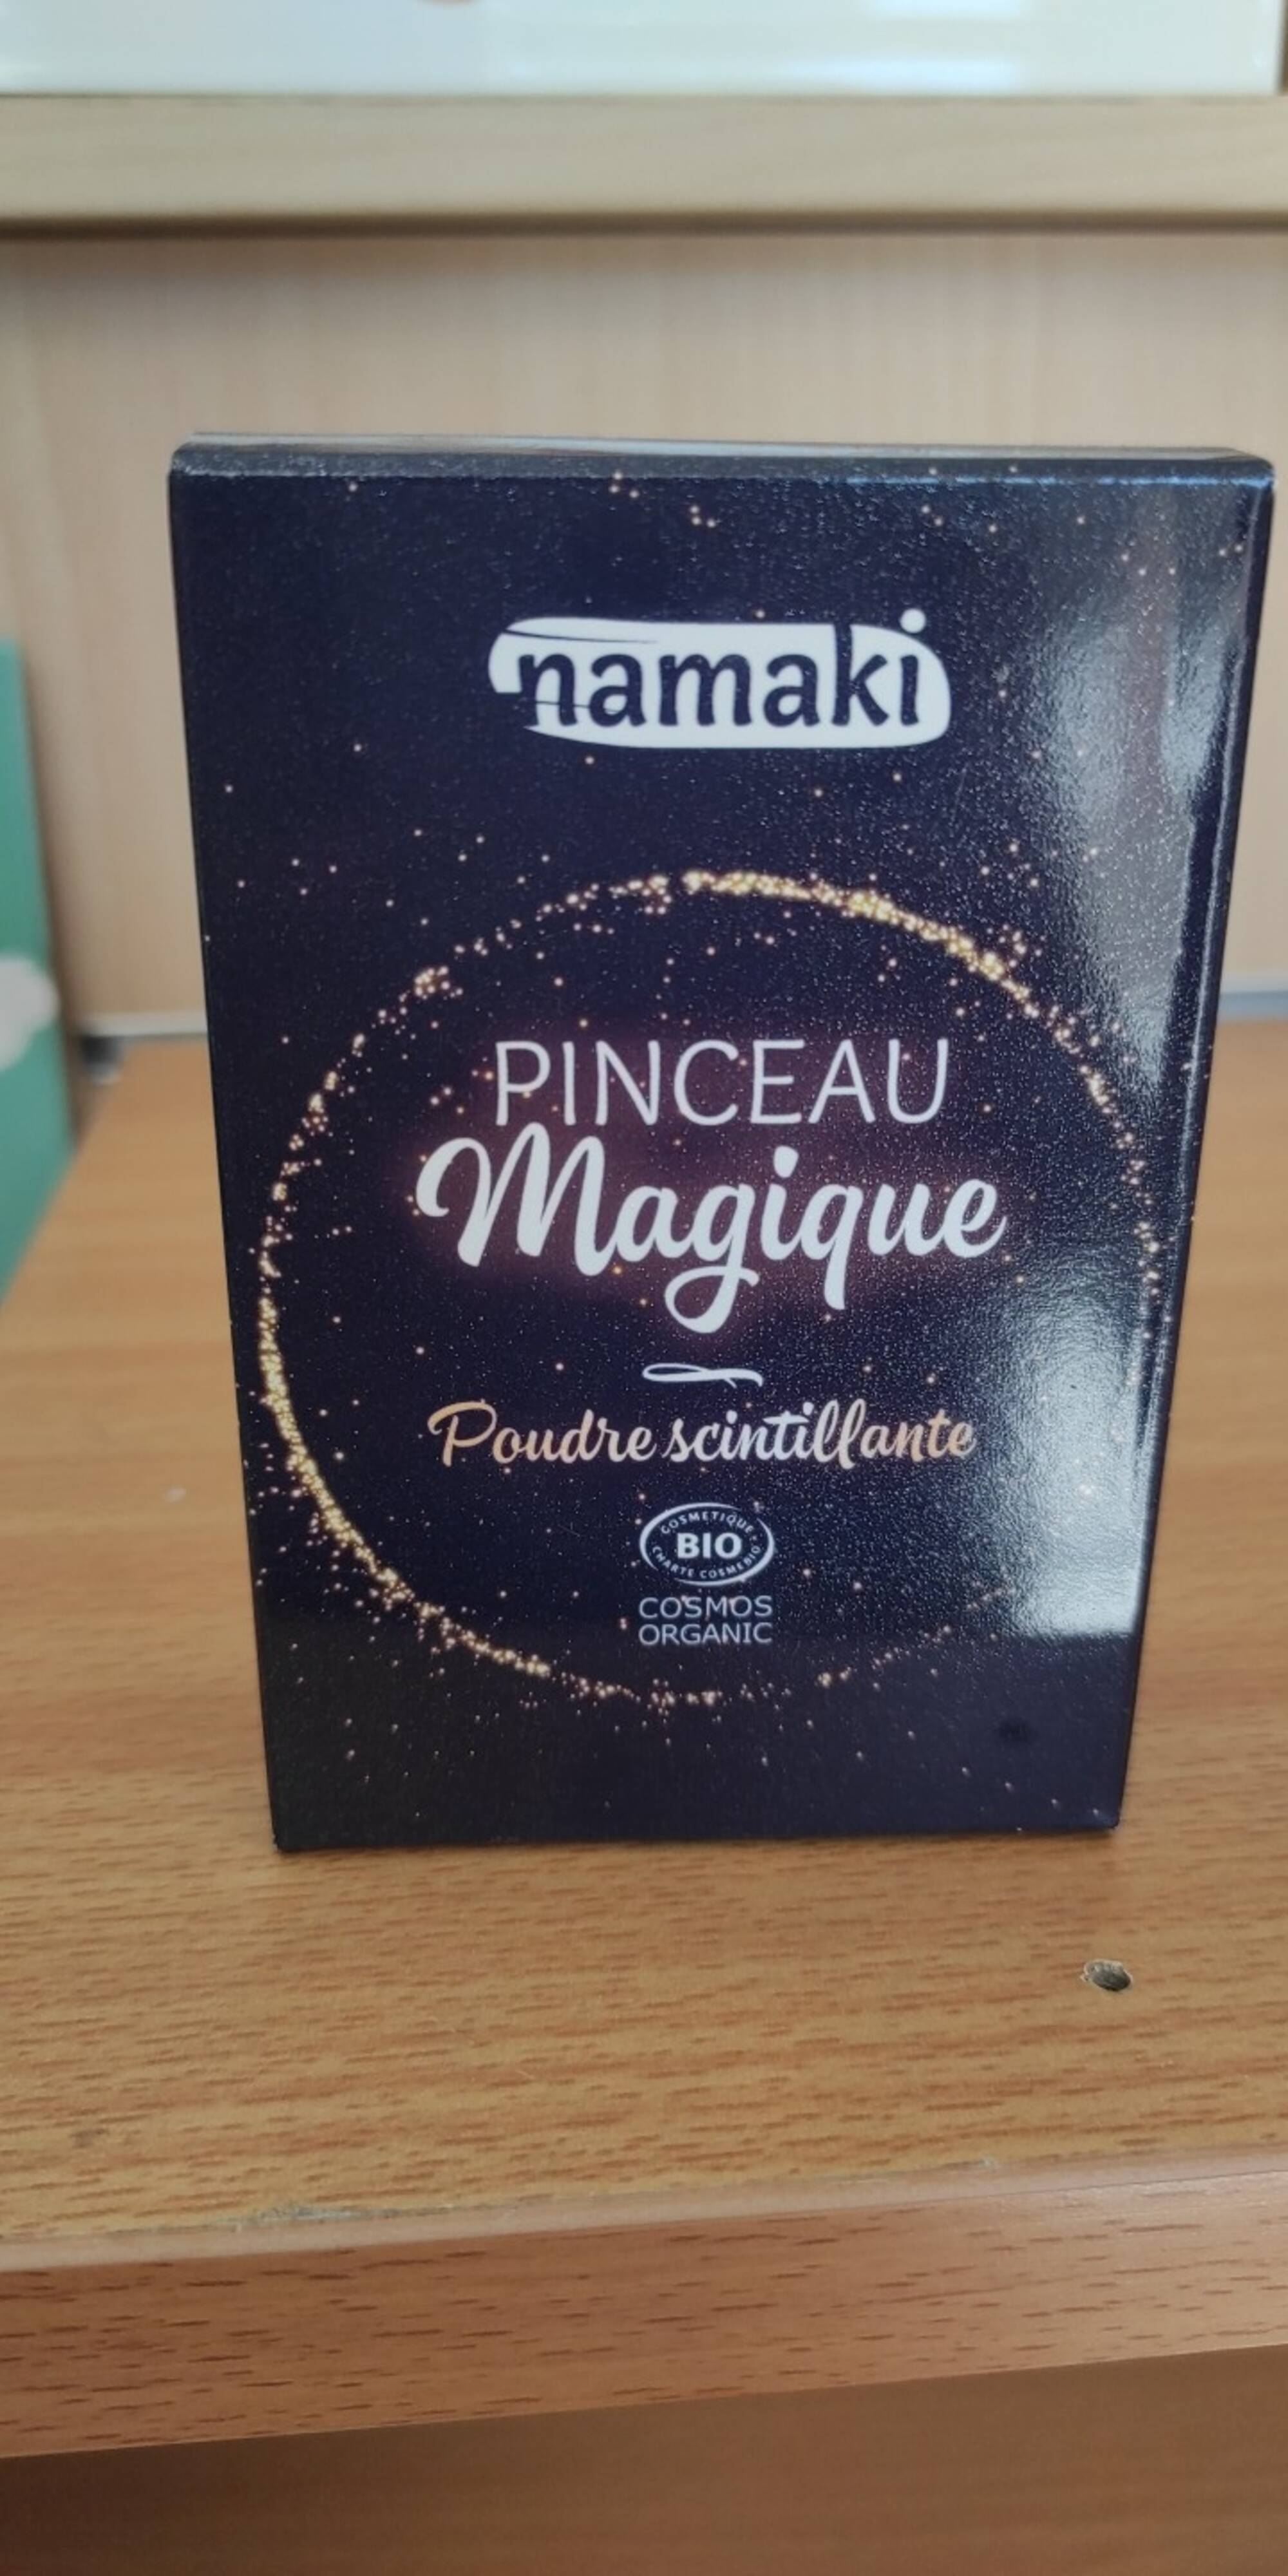 NAMAKI - Pinceau magique - Poudre scintillante